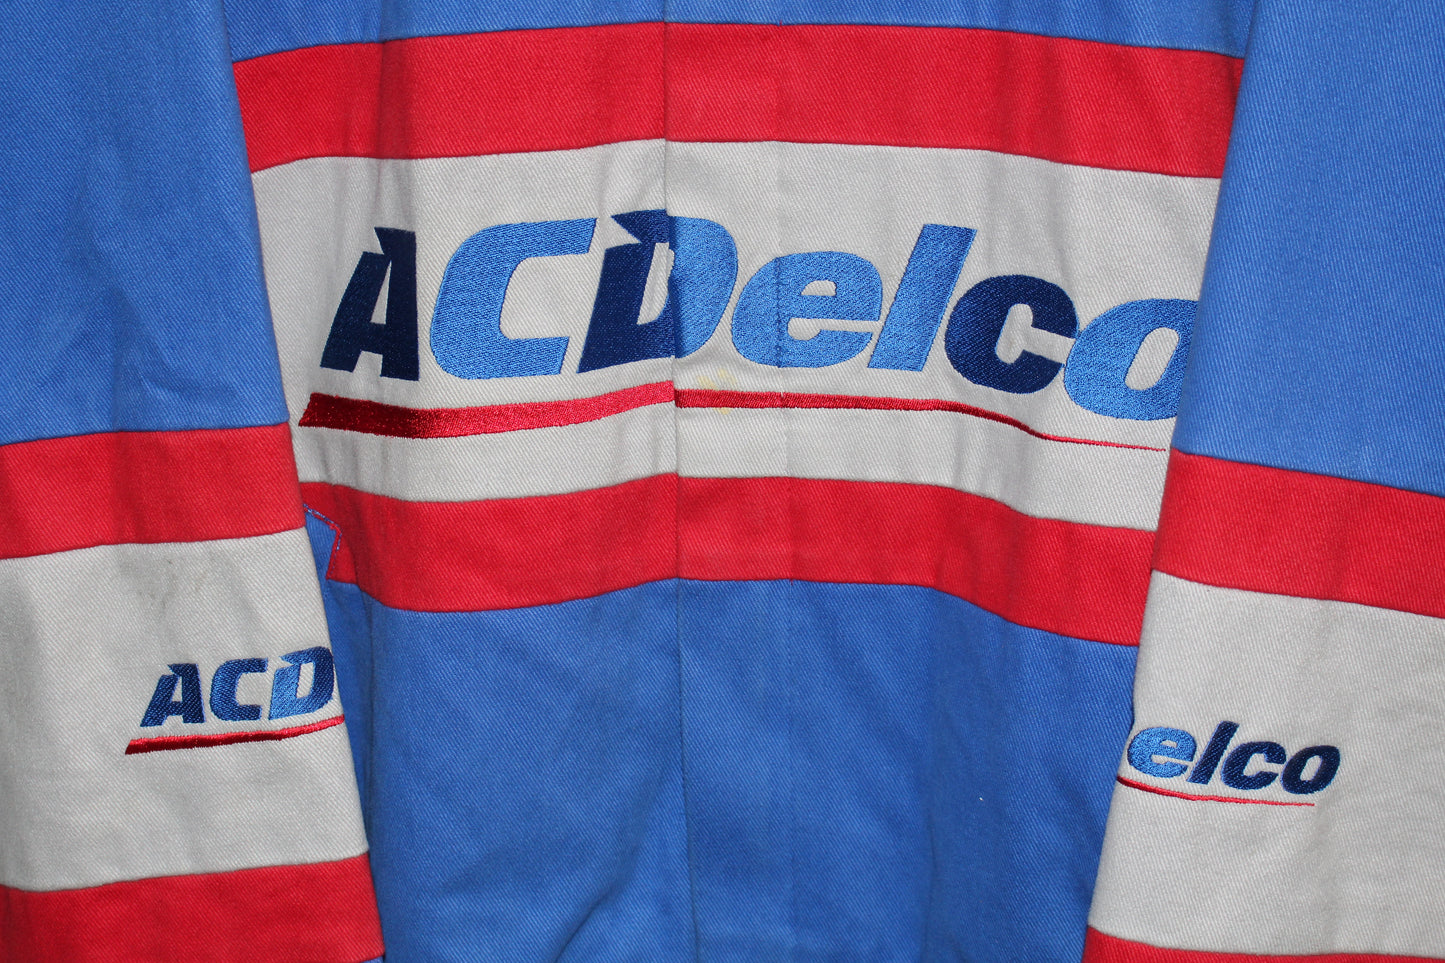 ACDelco Racing NASCAR Dale Earnhardt Jr #3 (L)